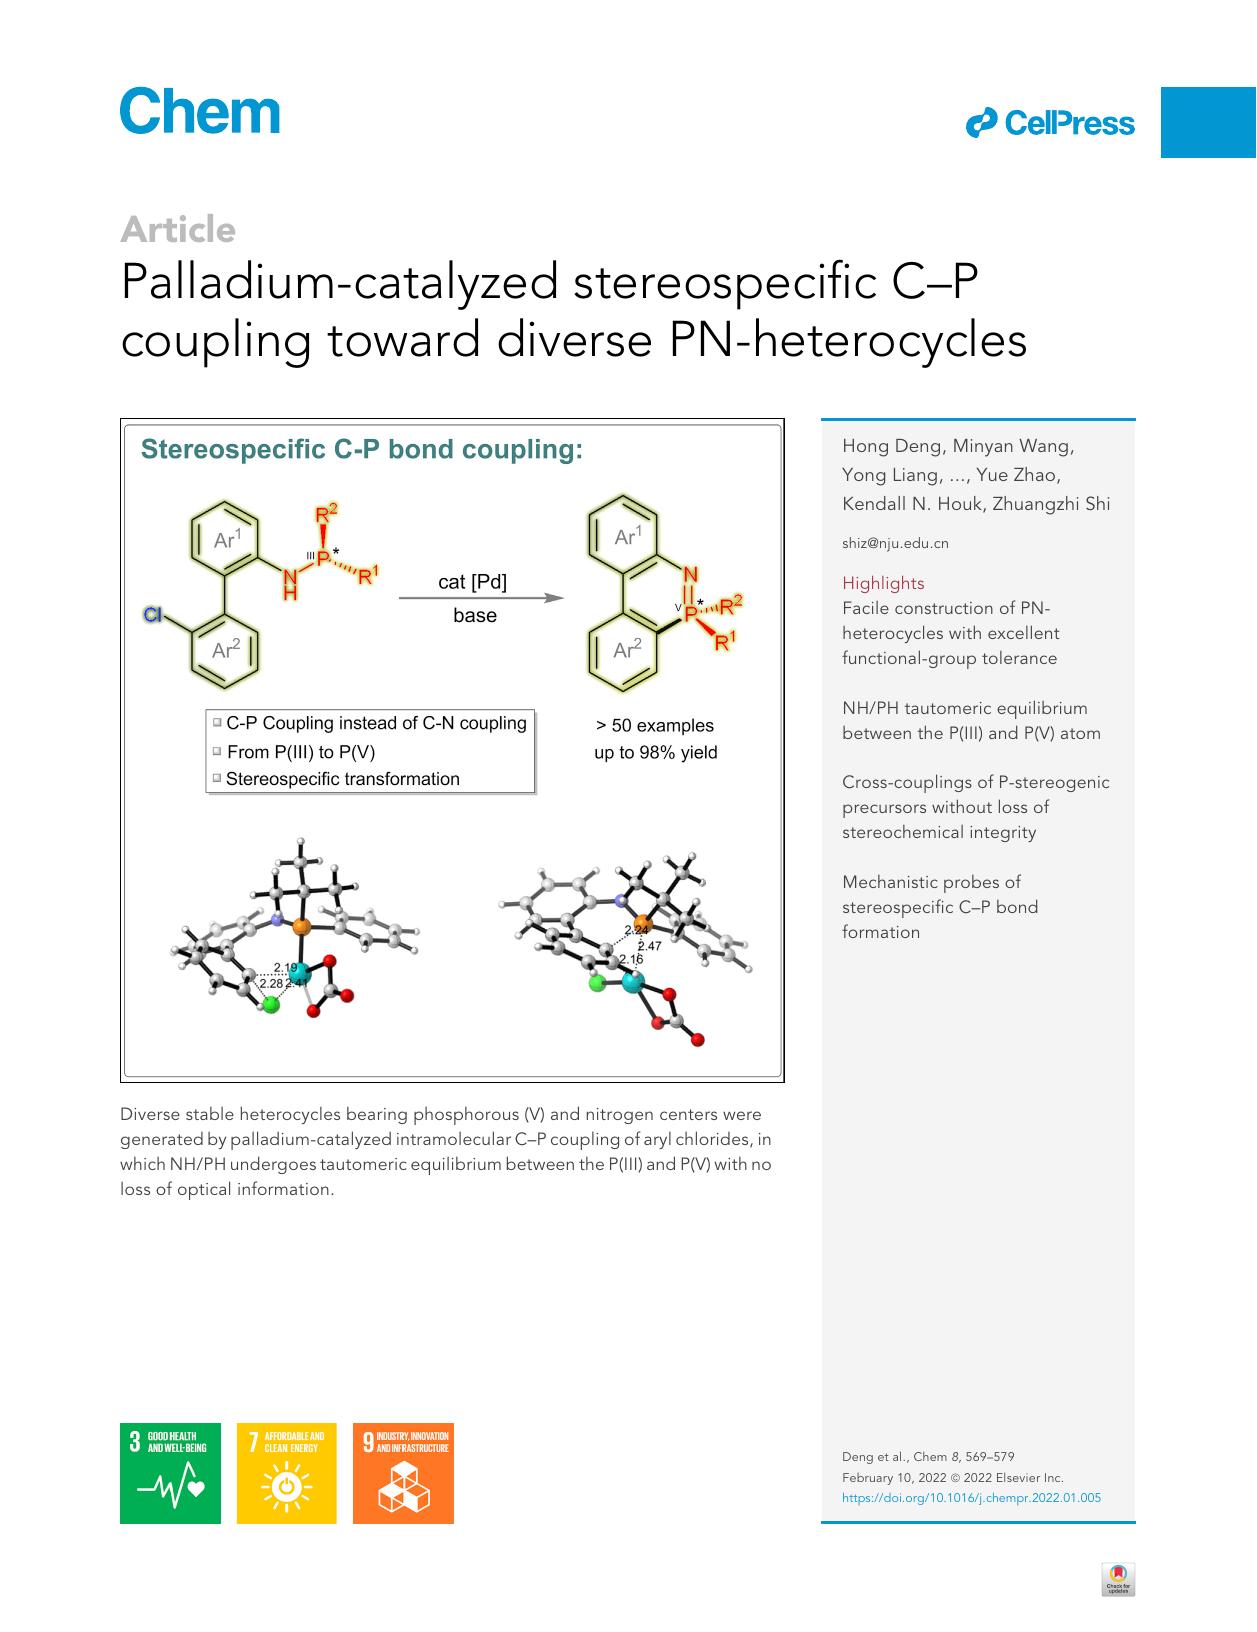 Palladium-catalyzed stereospecific C-P coupling toward diverse PN-heterocycles by unknow